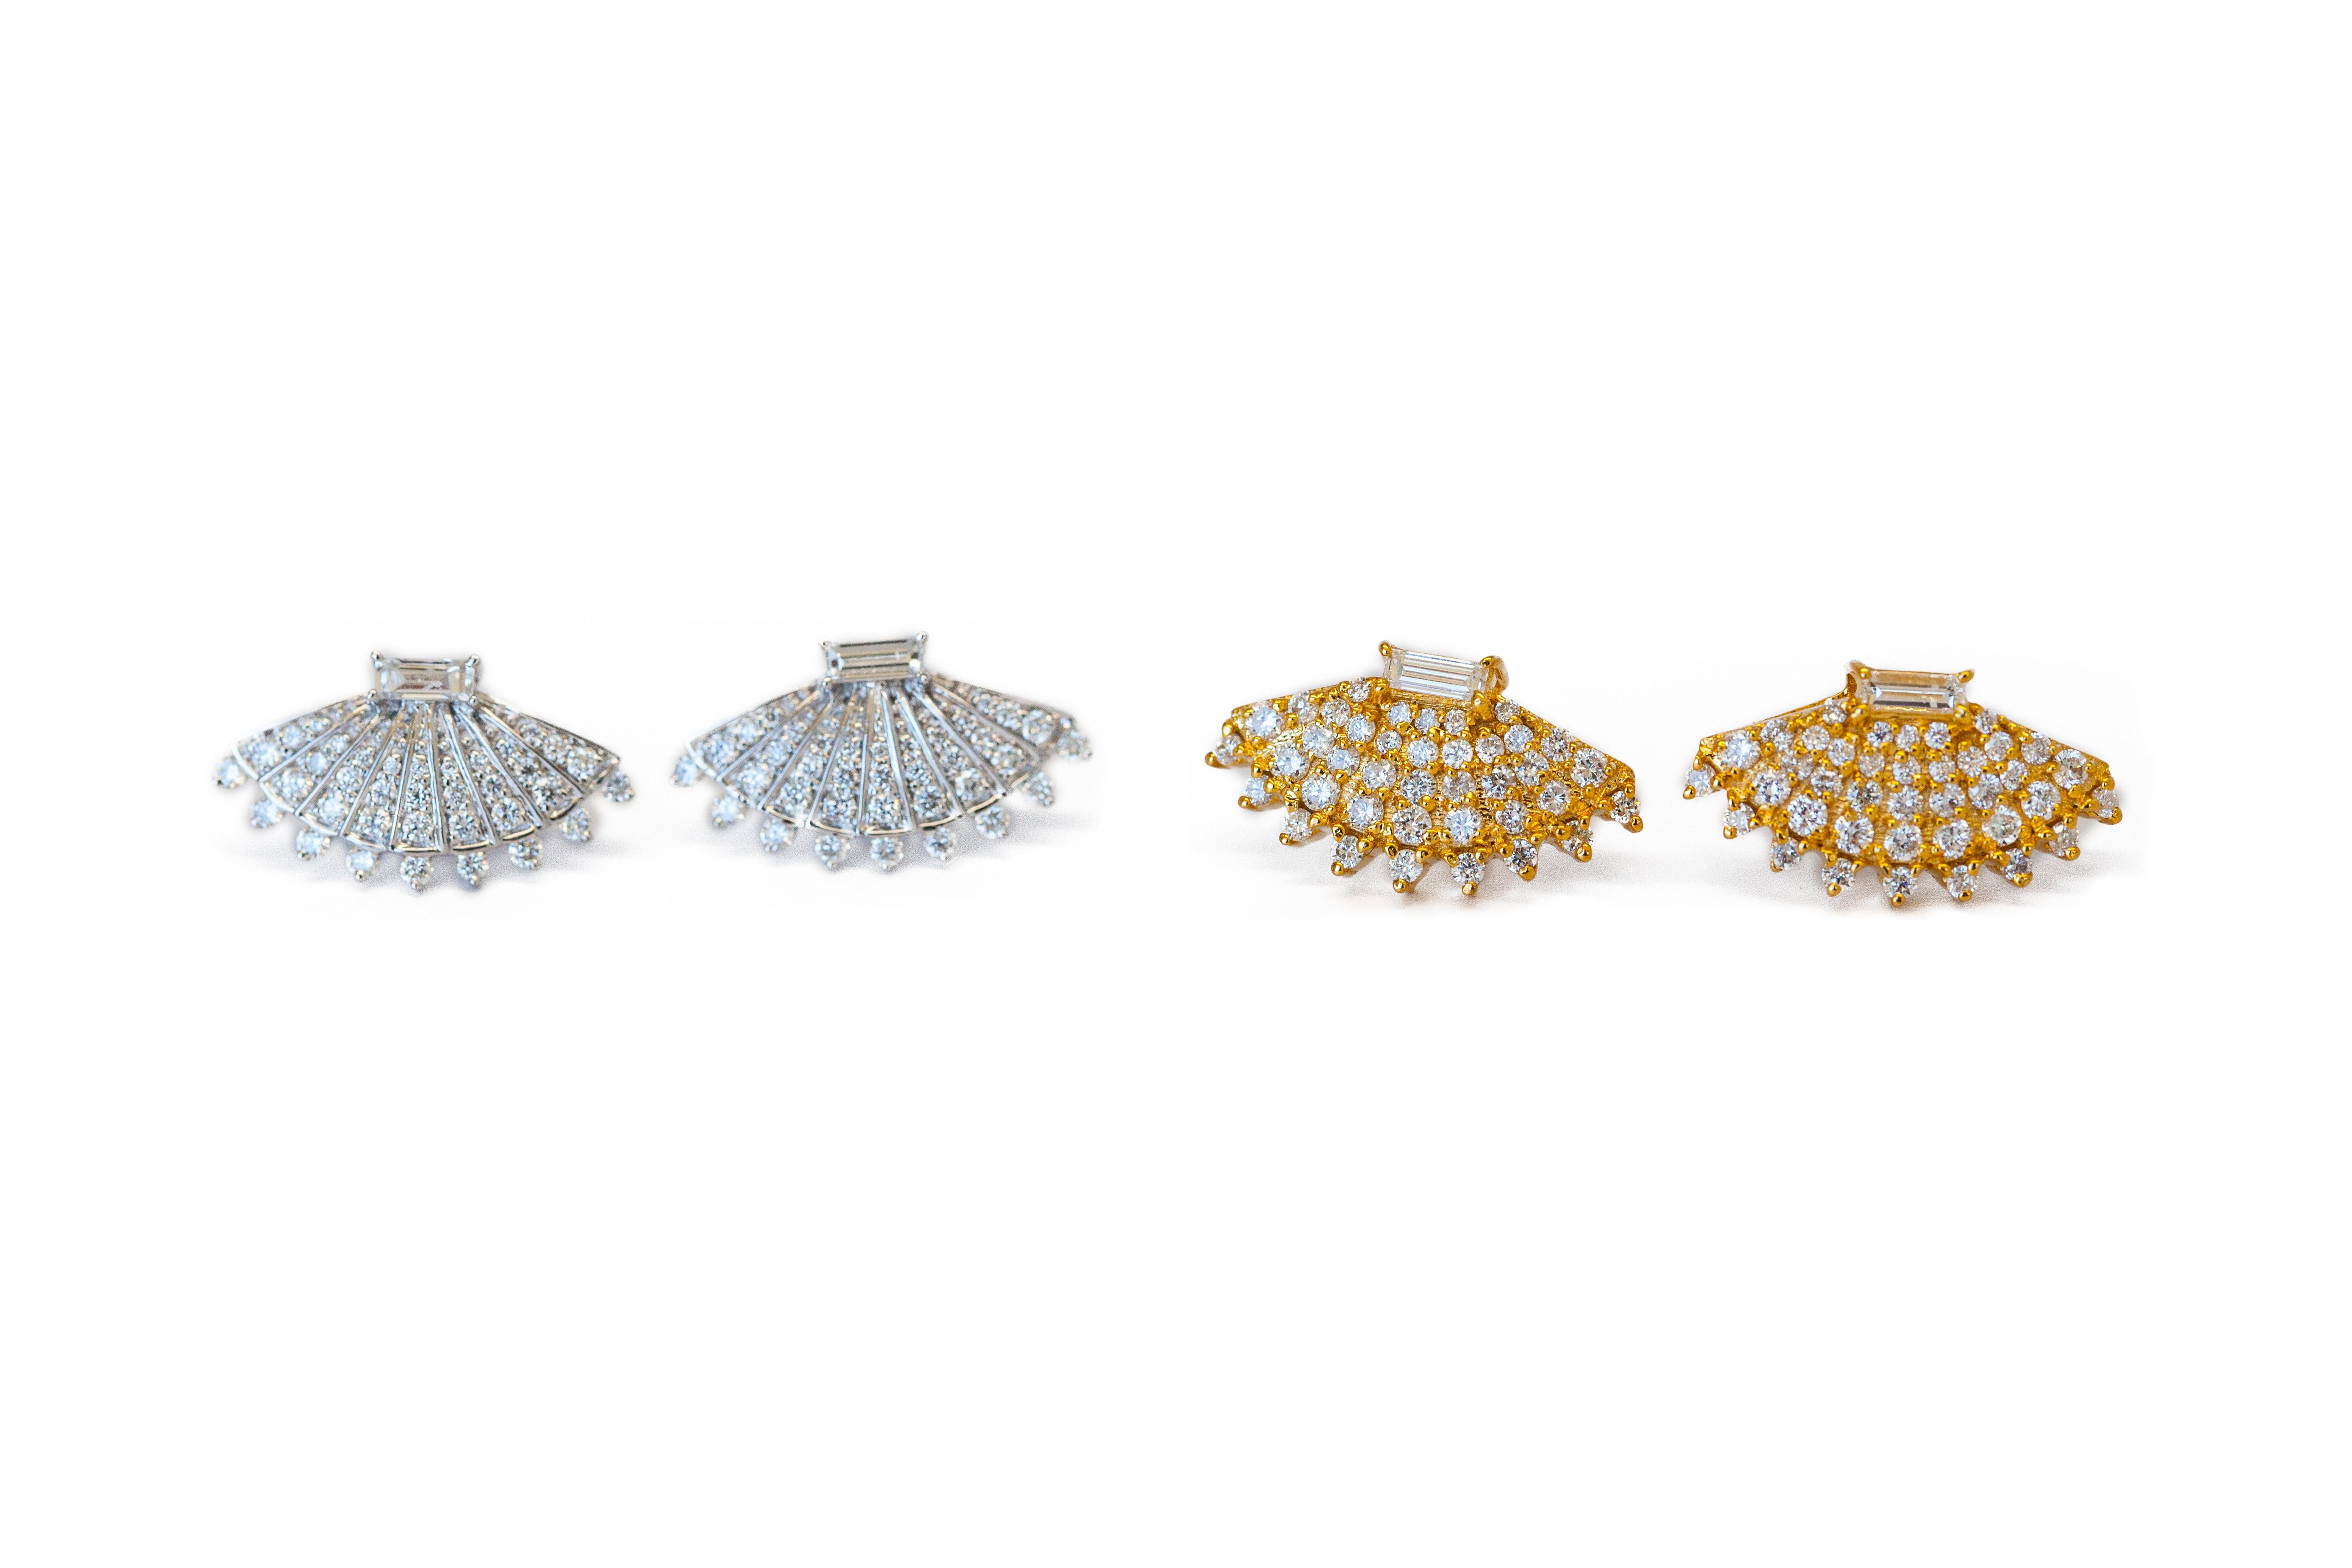 Contemporary Rounded Fan Diamond Earrings